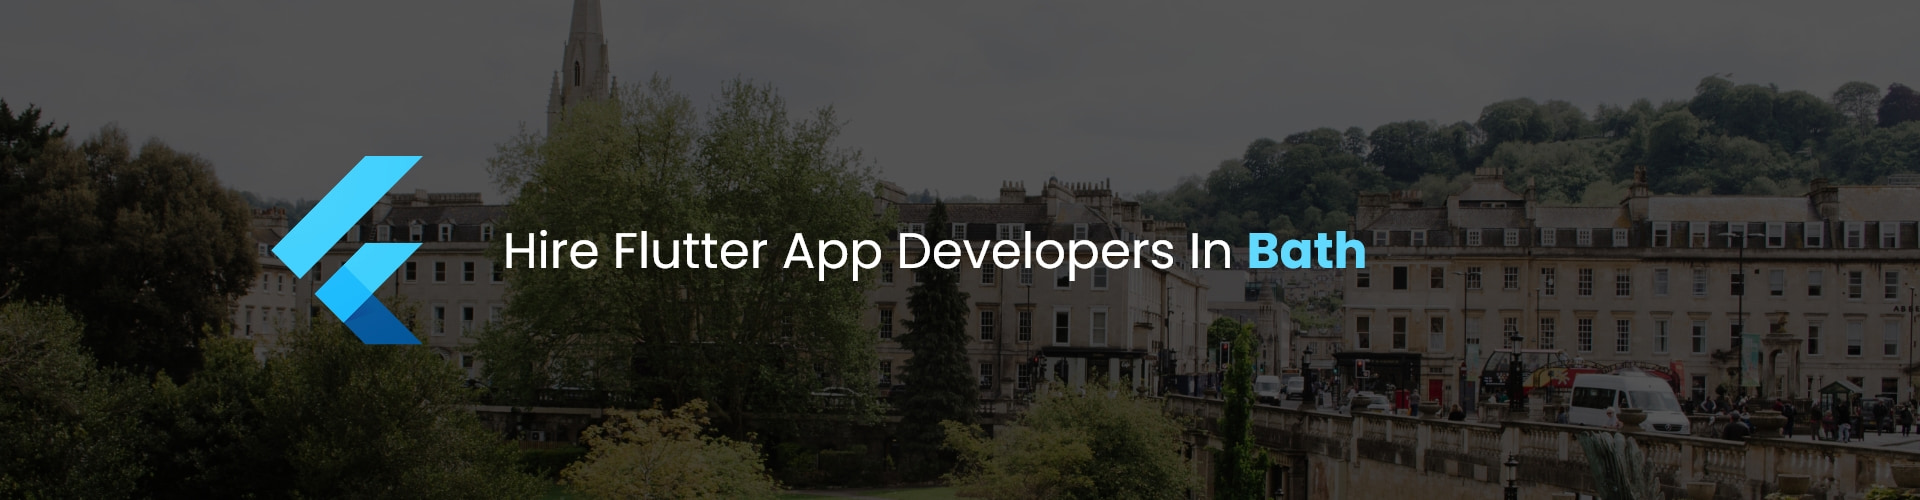 hire flutter app developers in bath